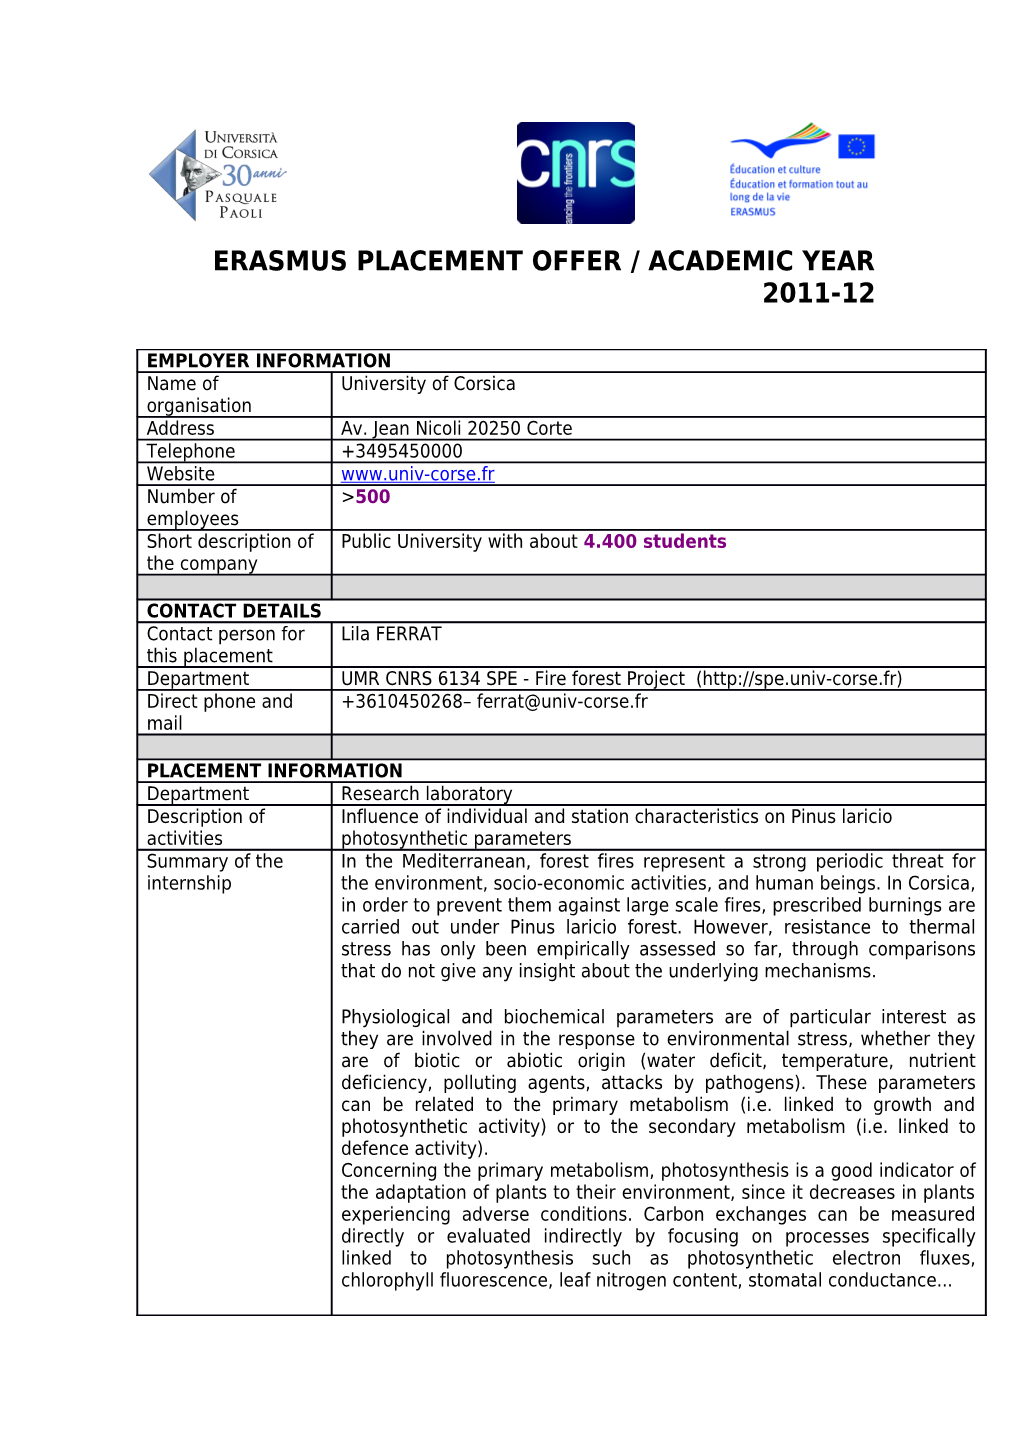 Erasmus Placement Offer / Academic Year 2011-12